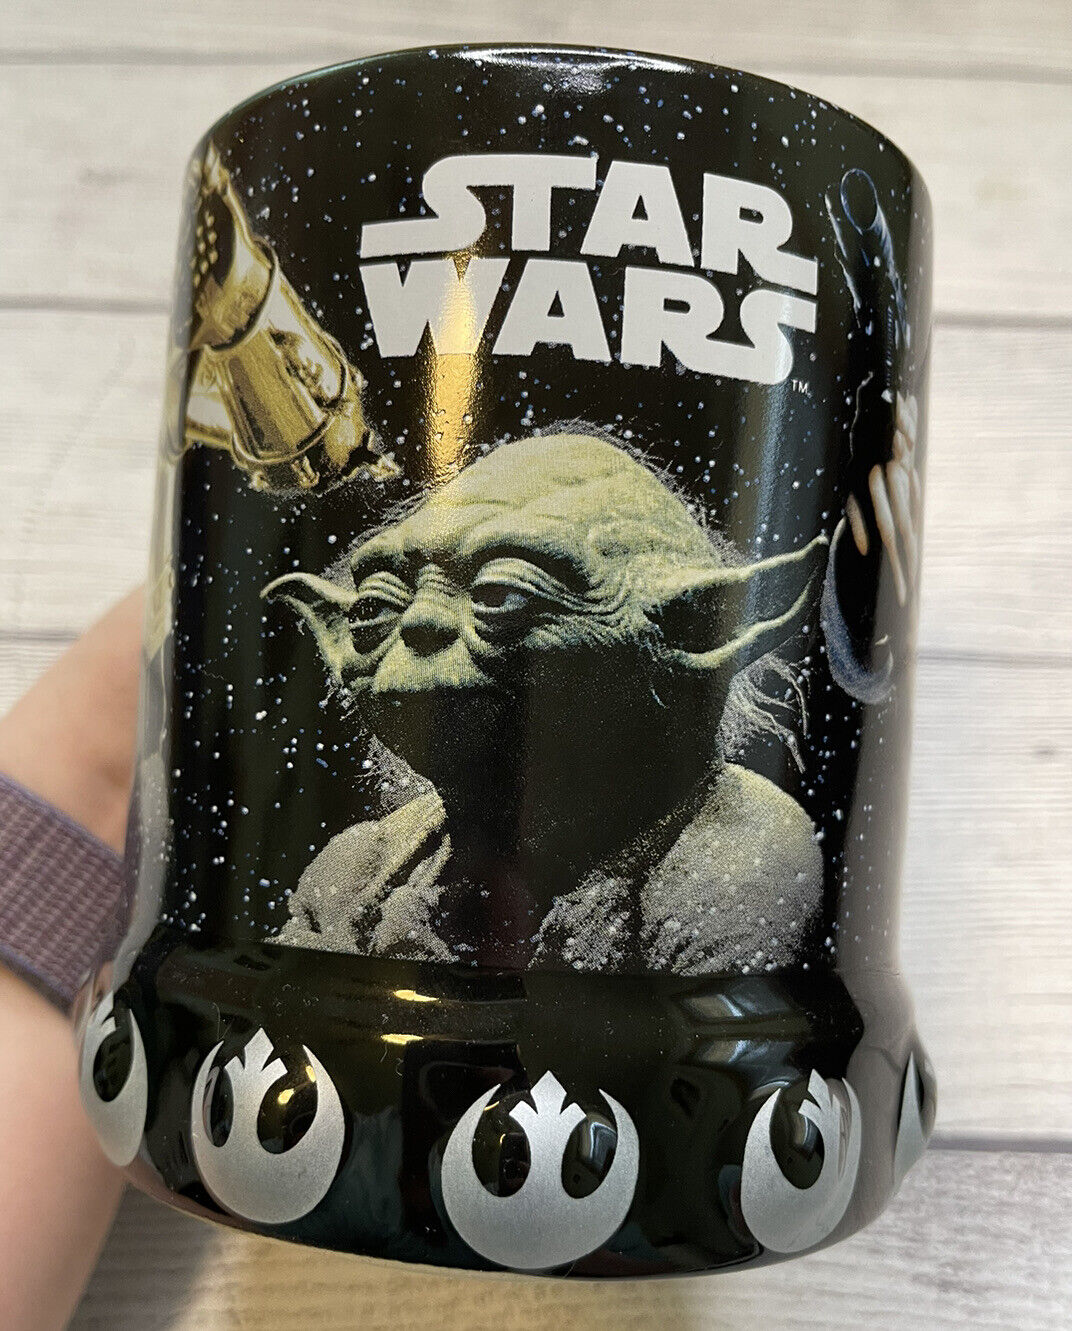 Star Wars Galerie Coffee Mug  Yoda ,C3PO and R2D2, Han Solo,Luke Skywalker 20oz